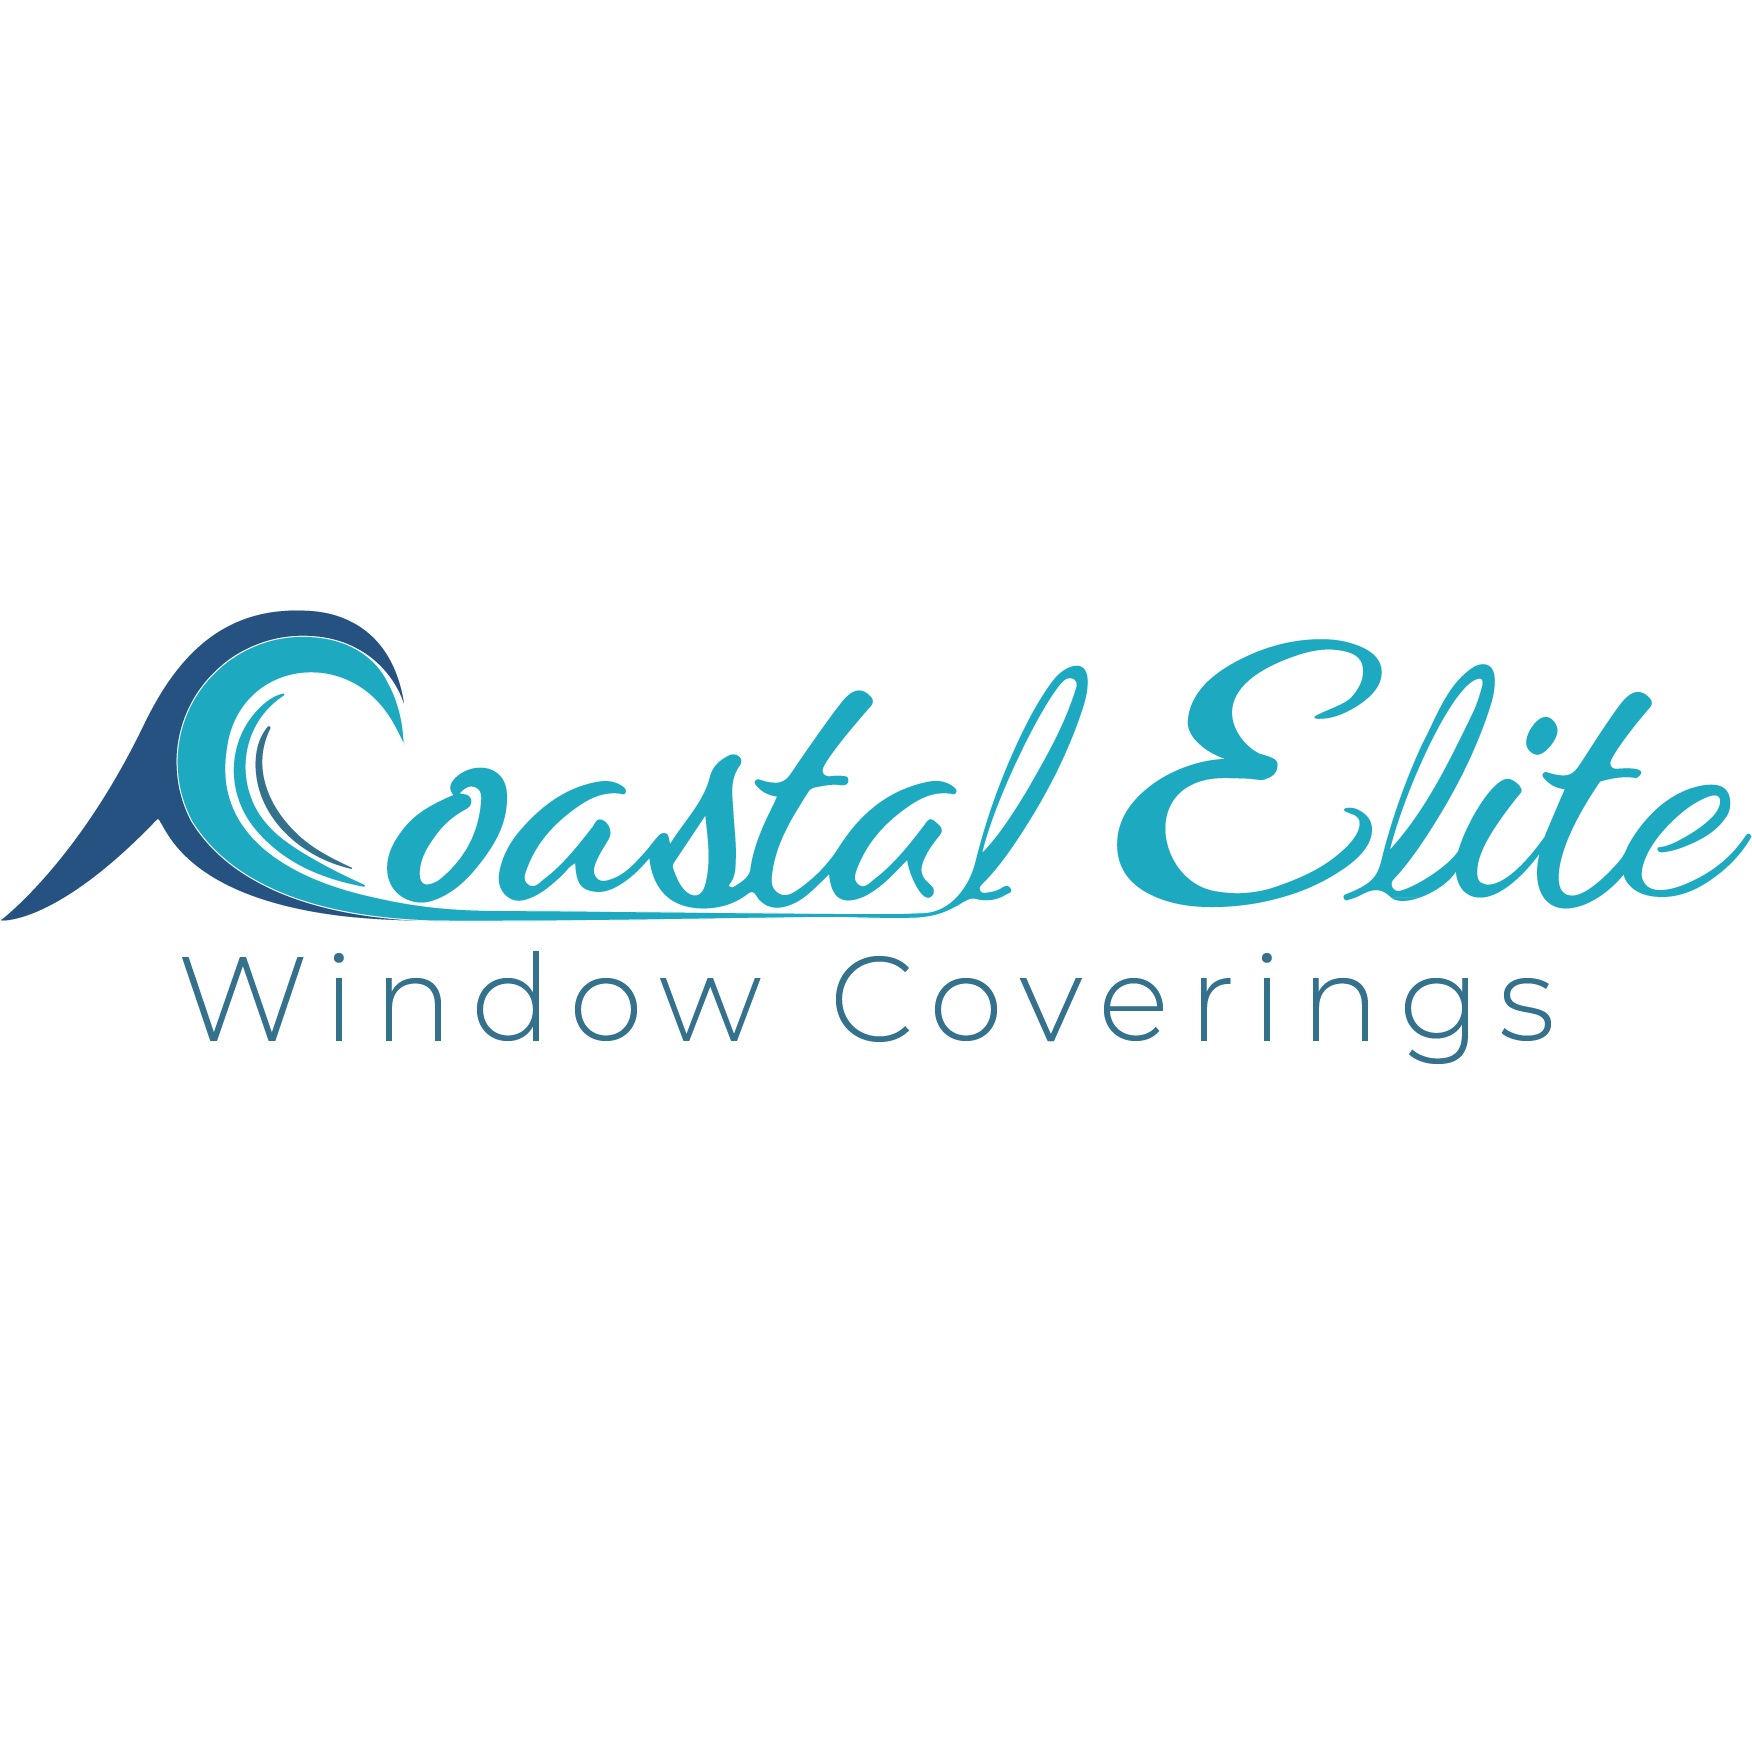 Coastal Elite Window Coverings